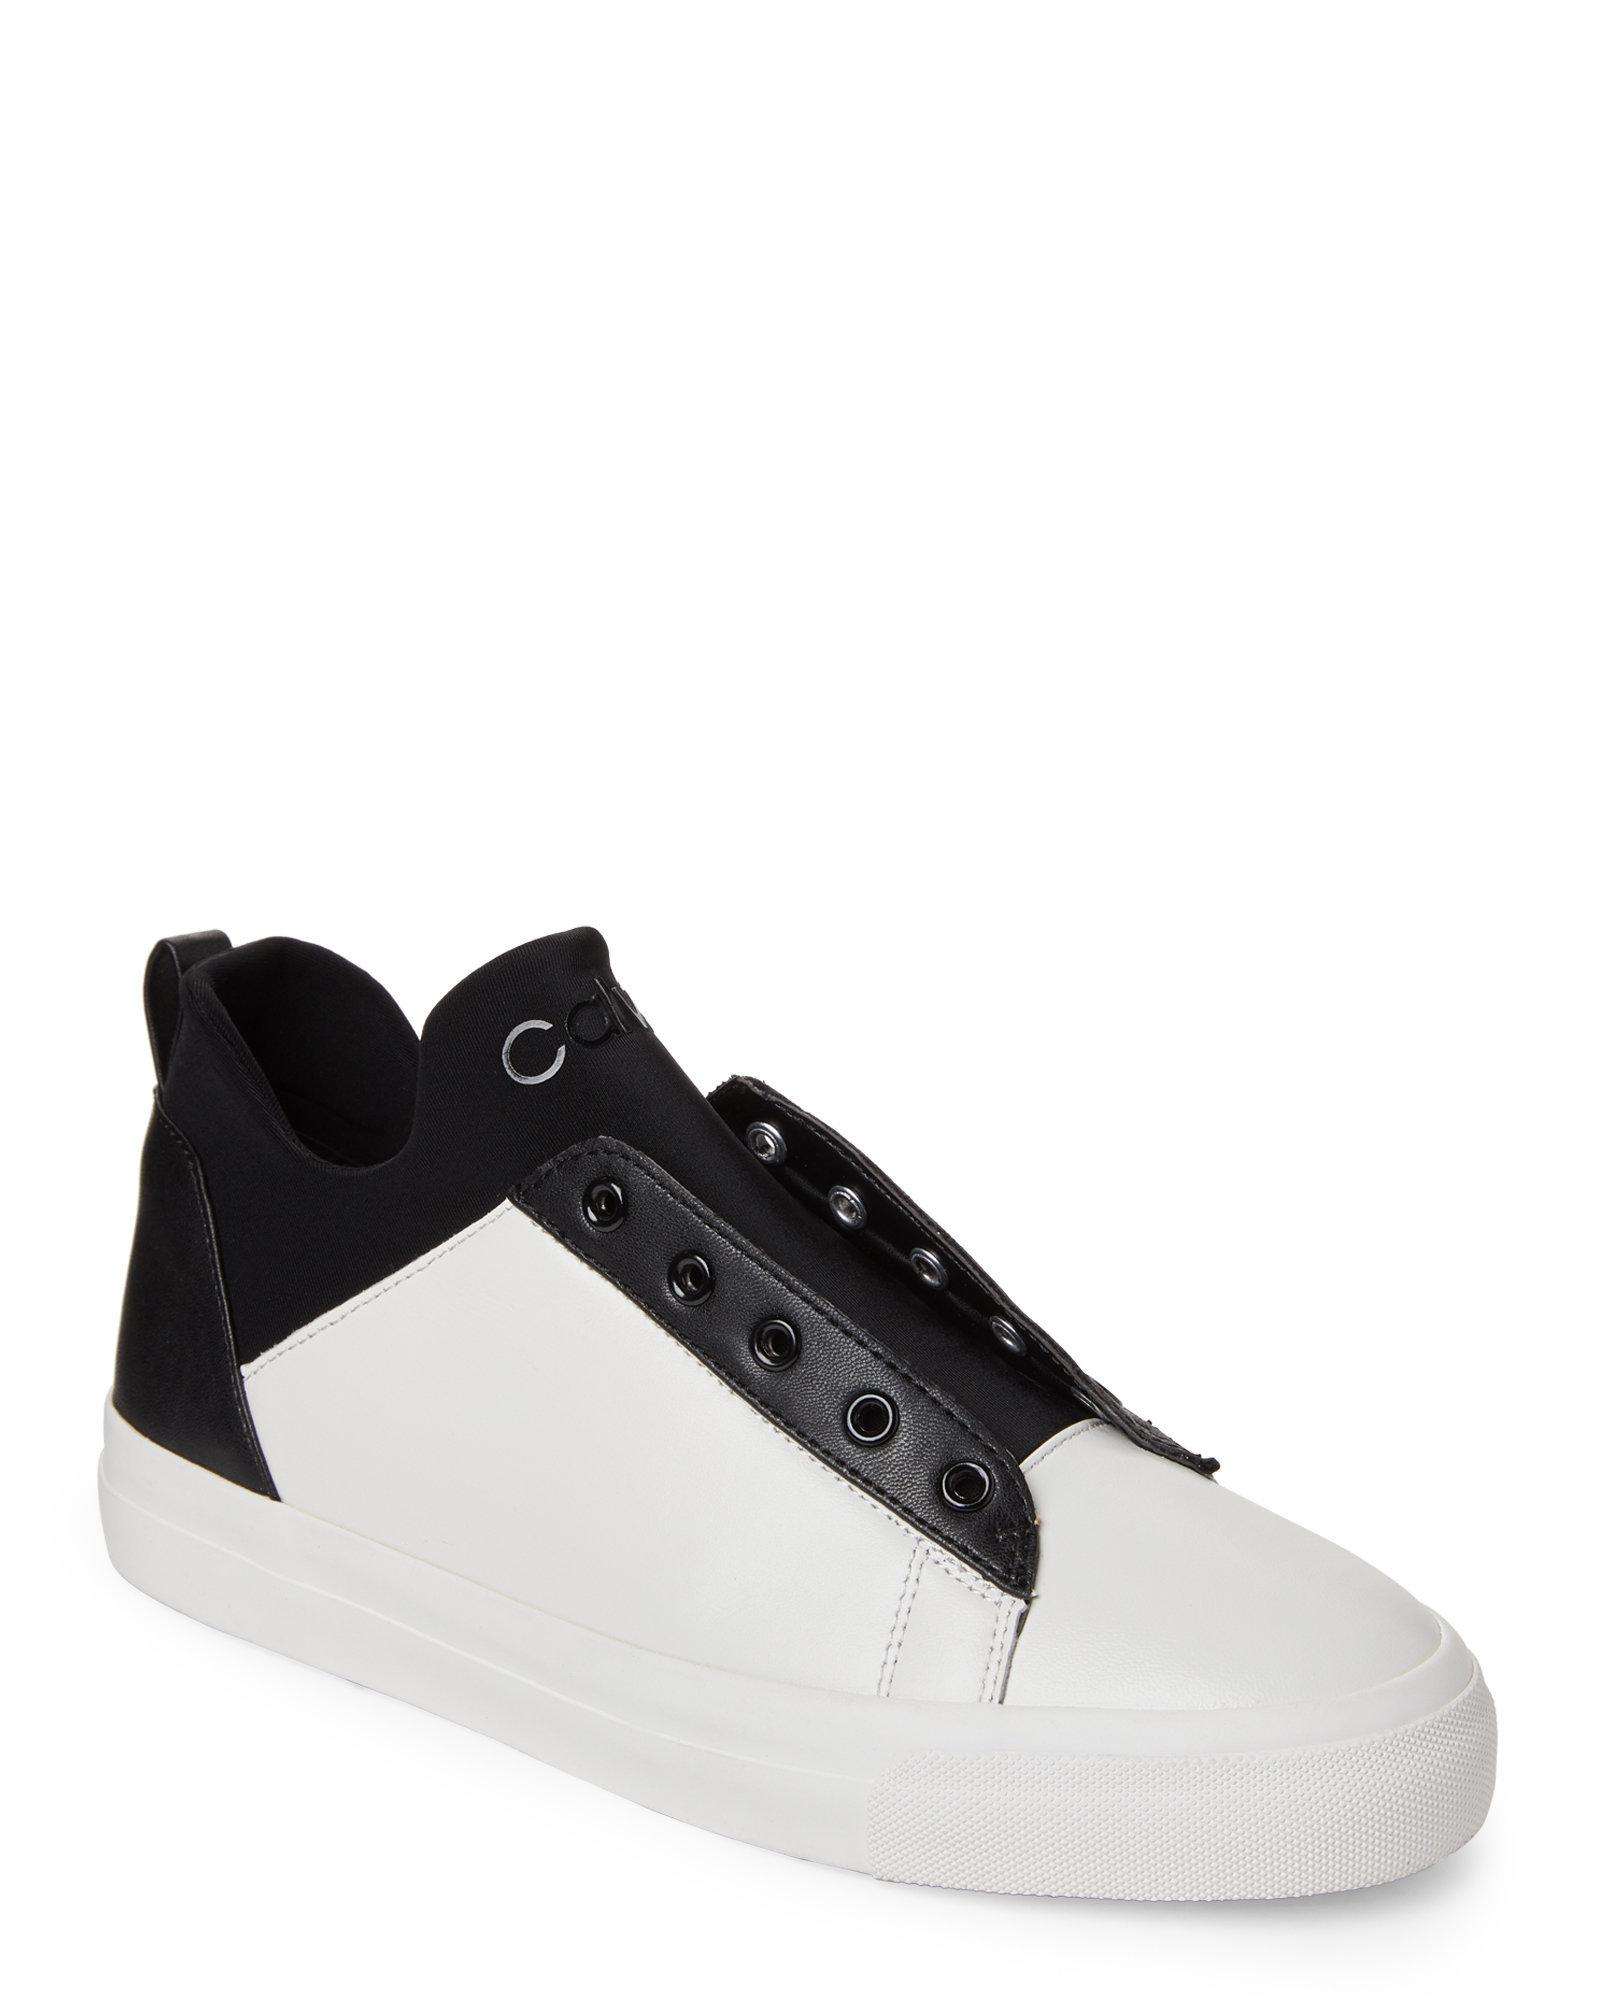 calvin klein black and white sneakers